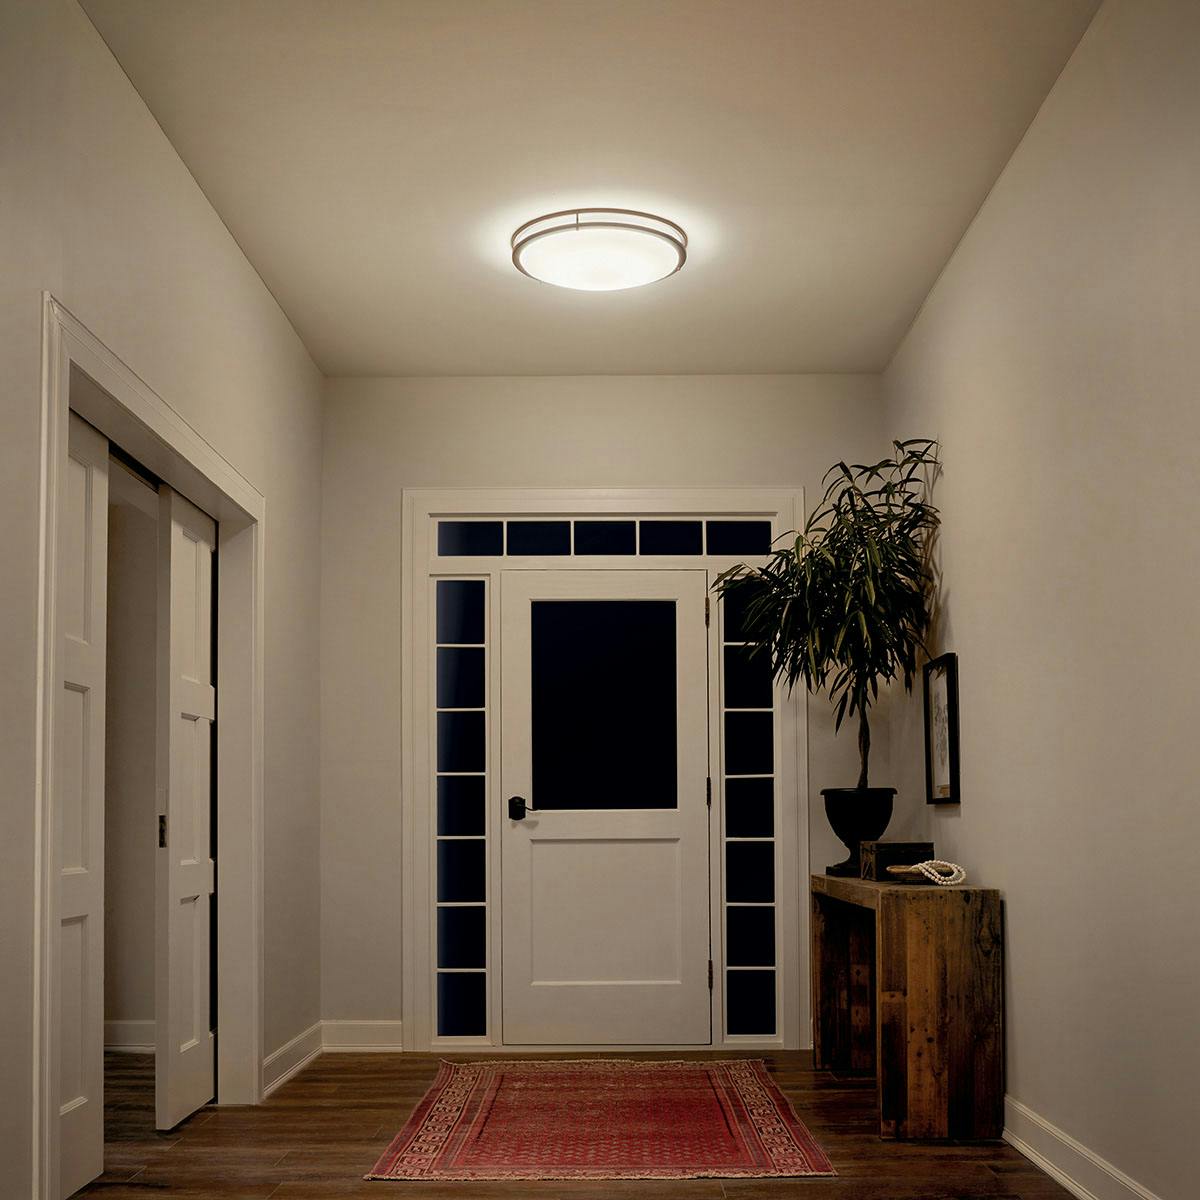 Night time Hallway image featuring Avon flush mount light 10788OZLED